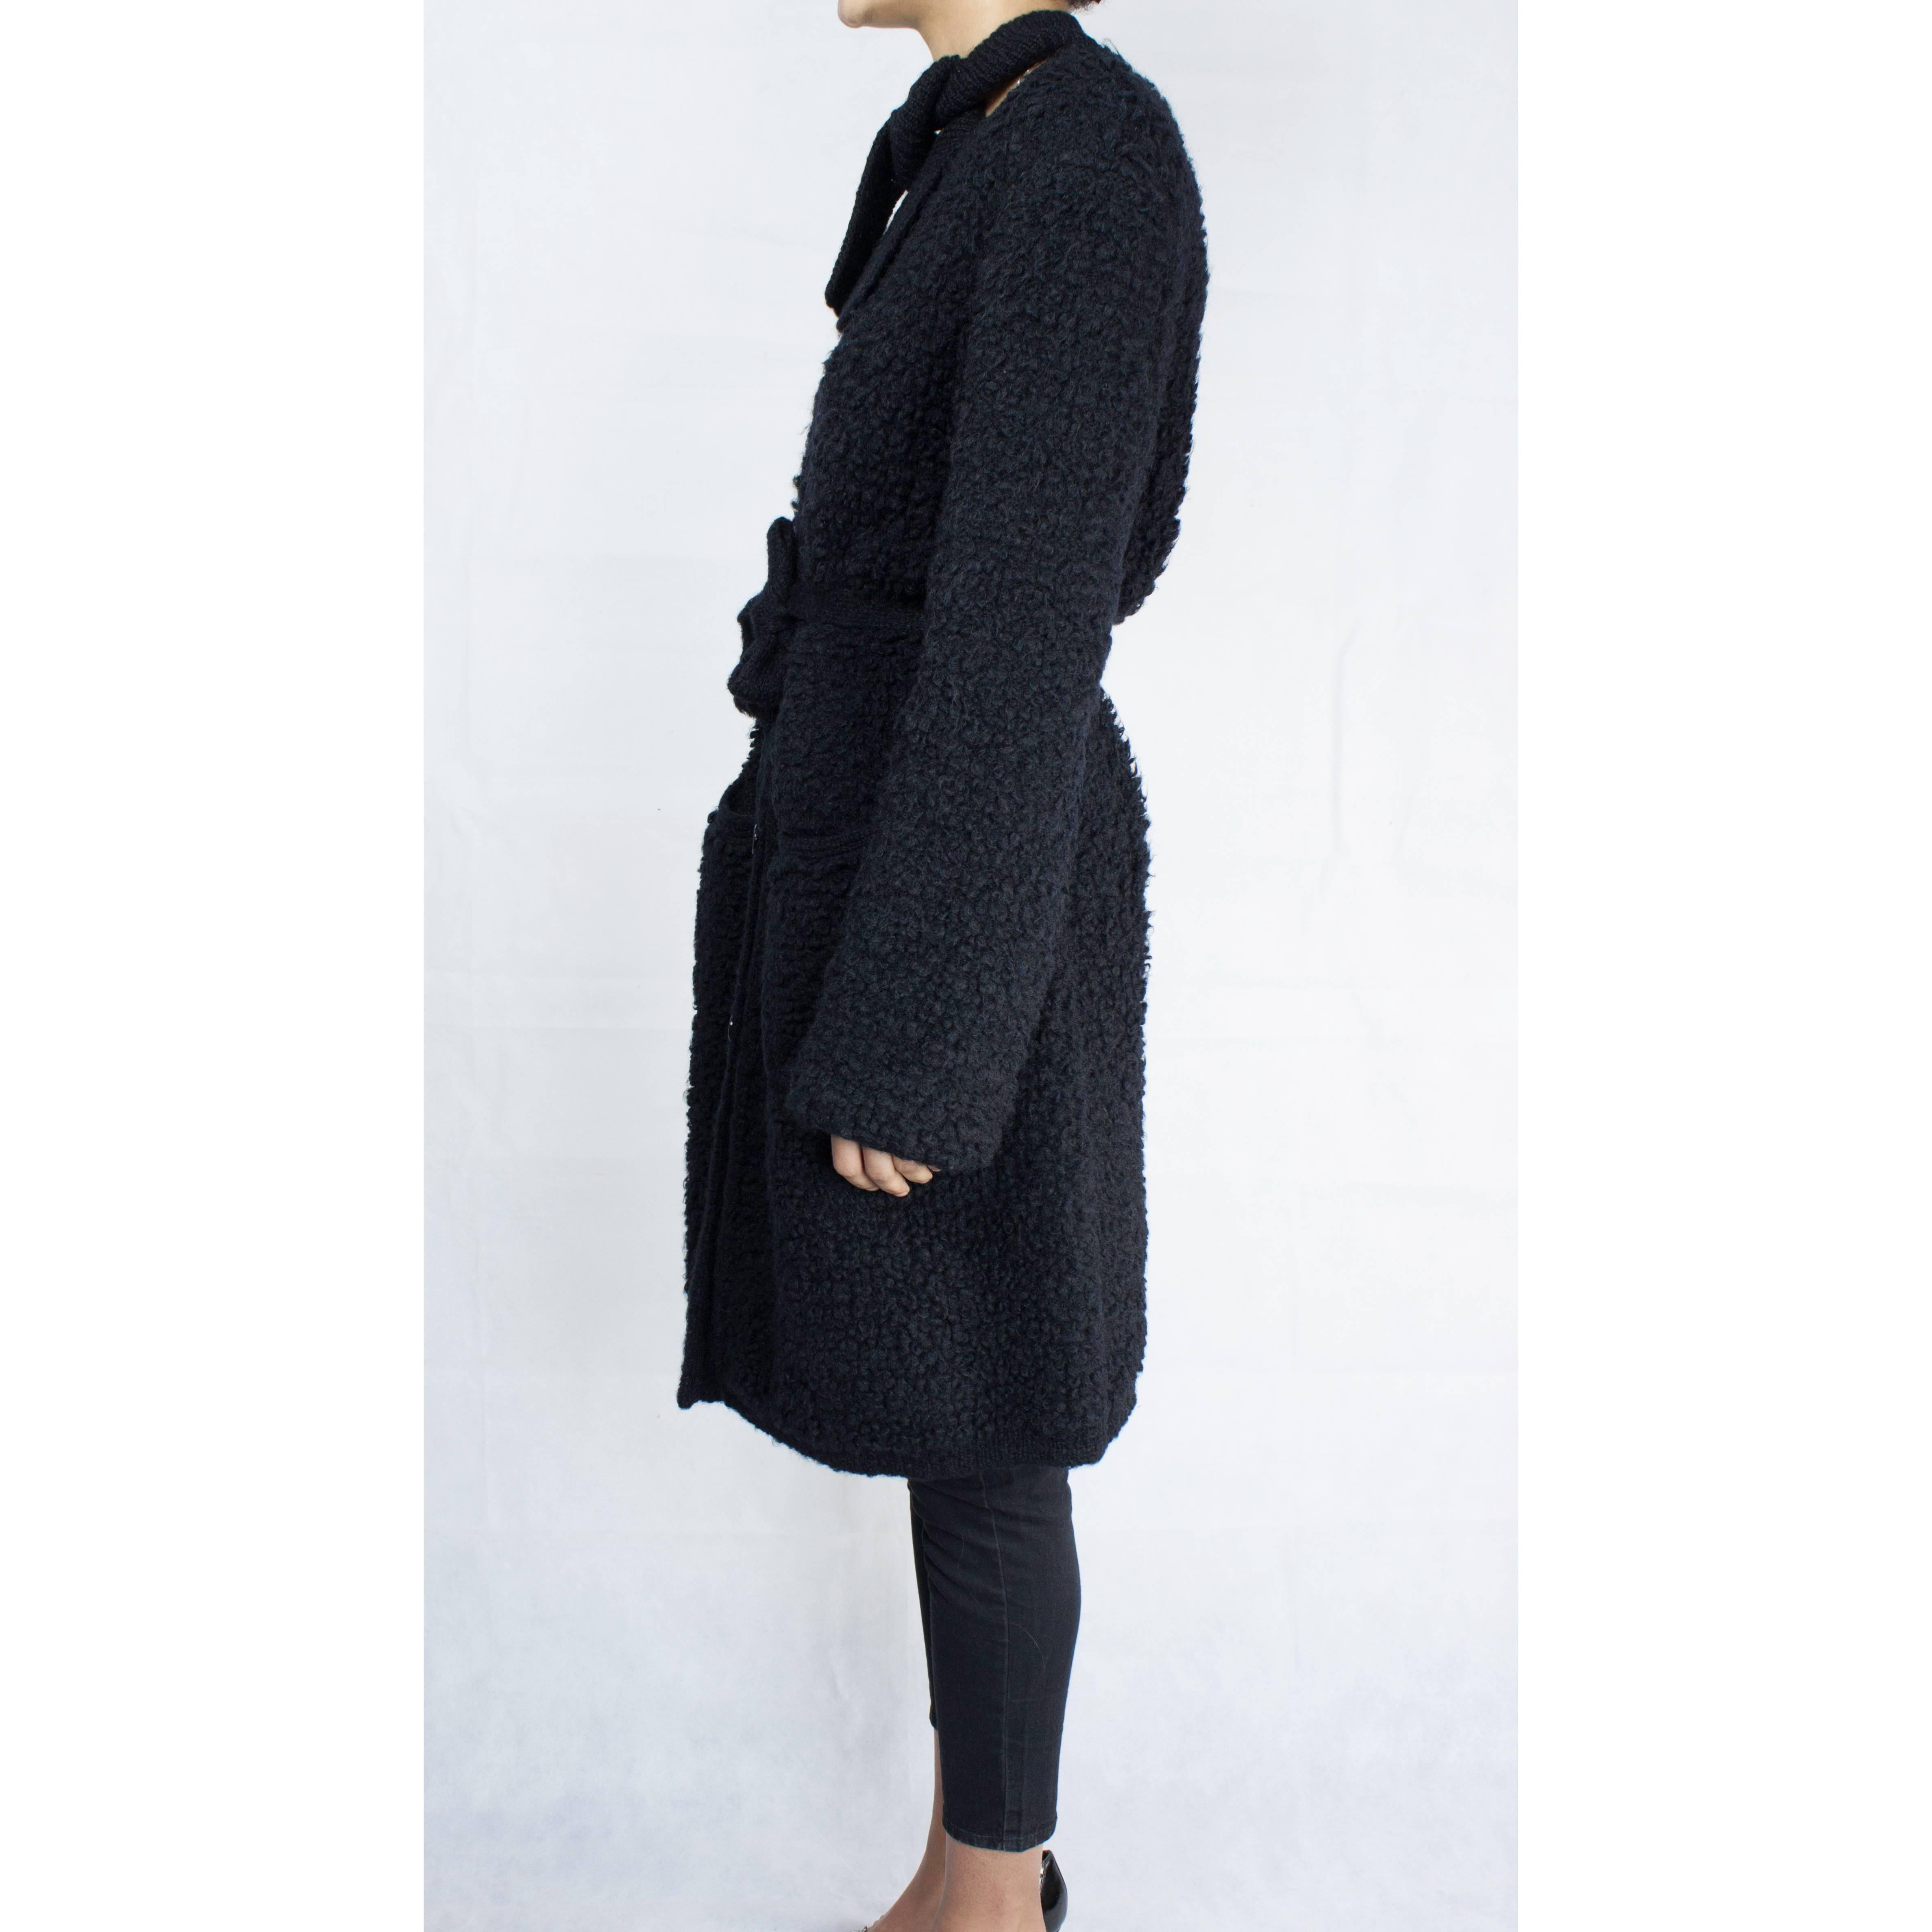 Black Sonia Rykiel Early knitted black wool coat, circa 1960s